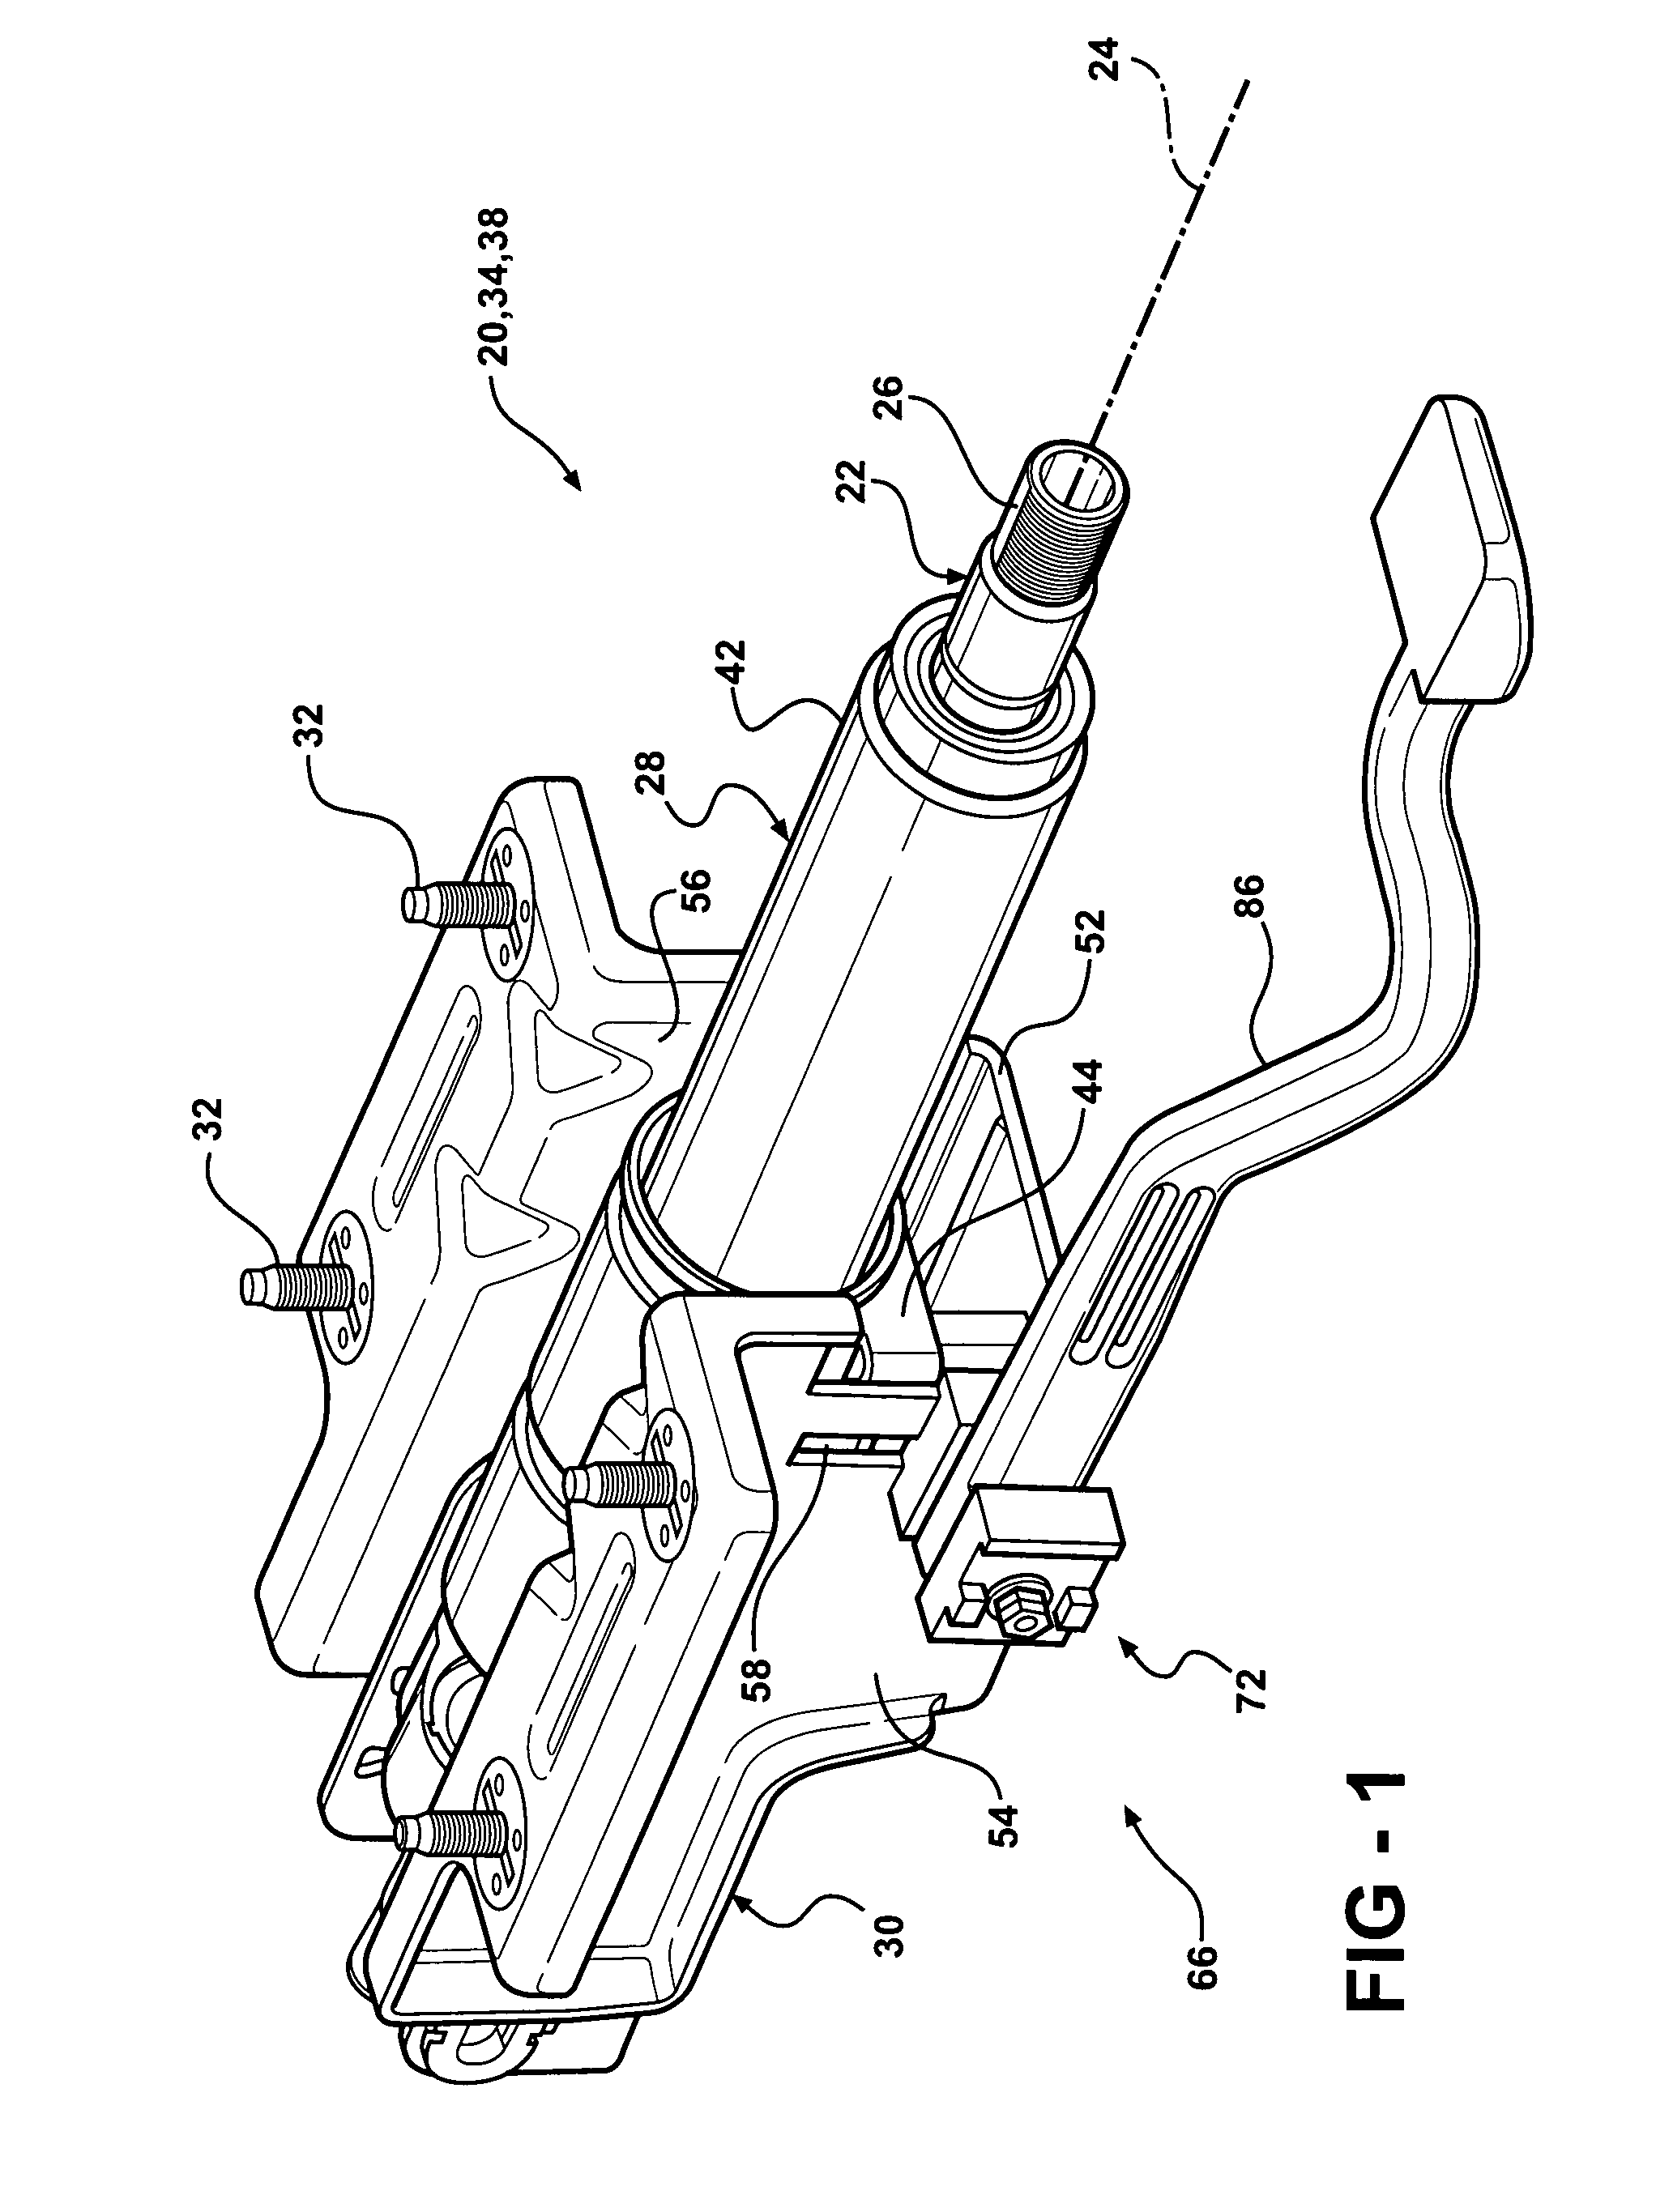 Rocker-arm lock device of an adjustable steering column assembly